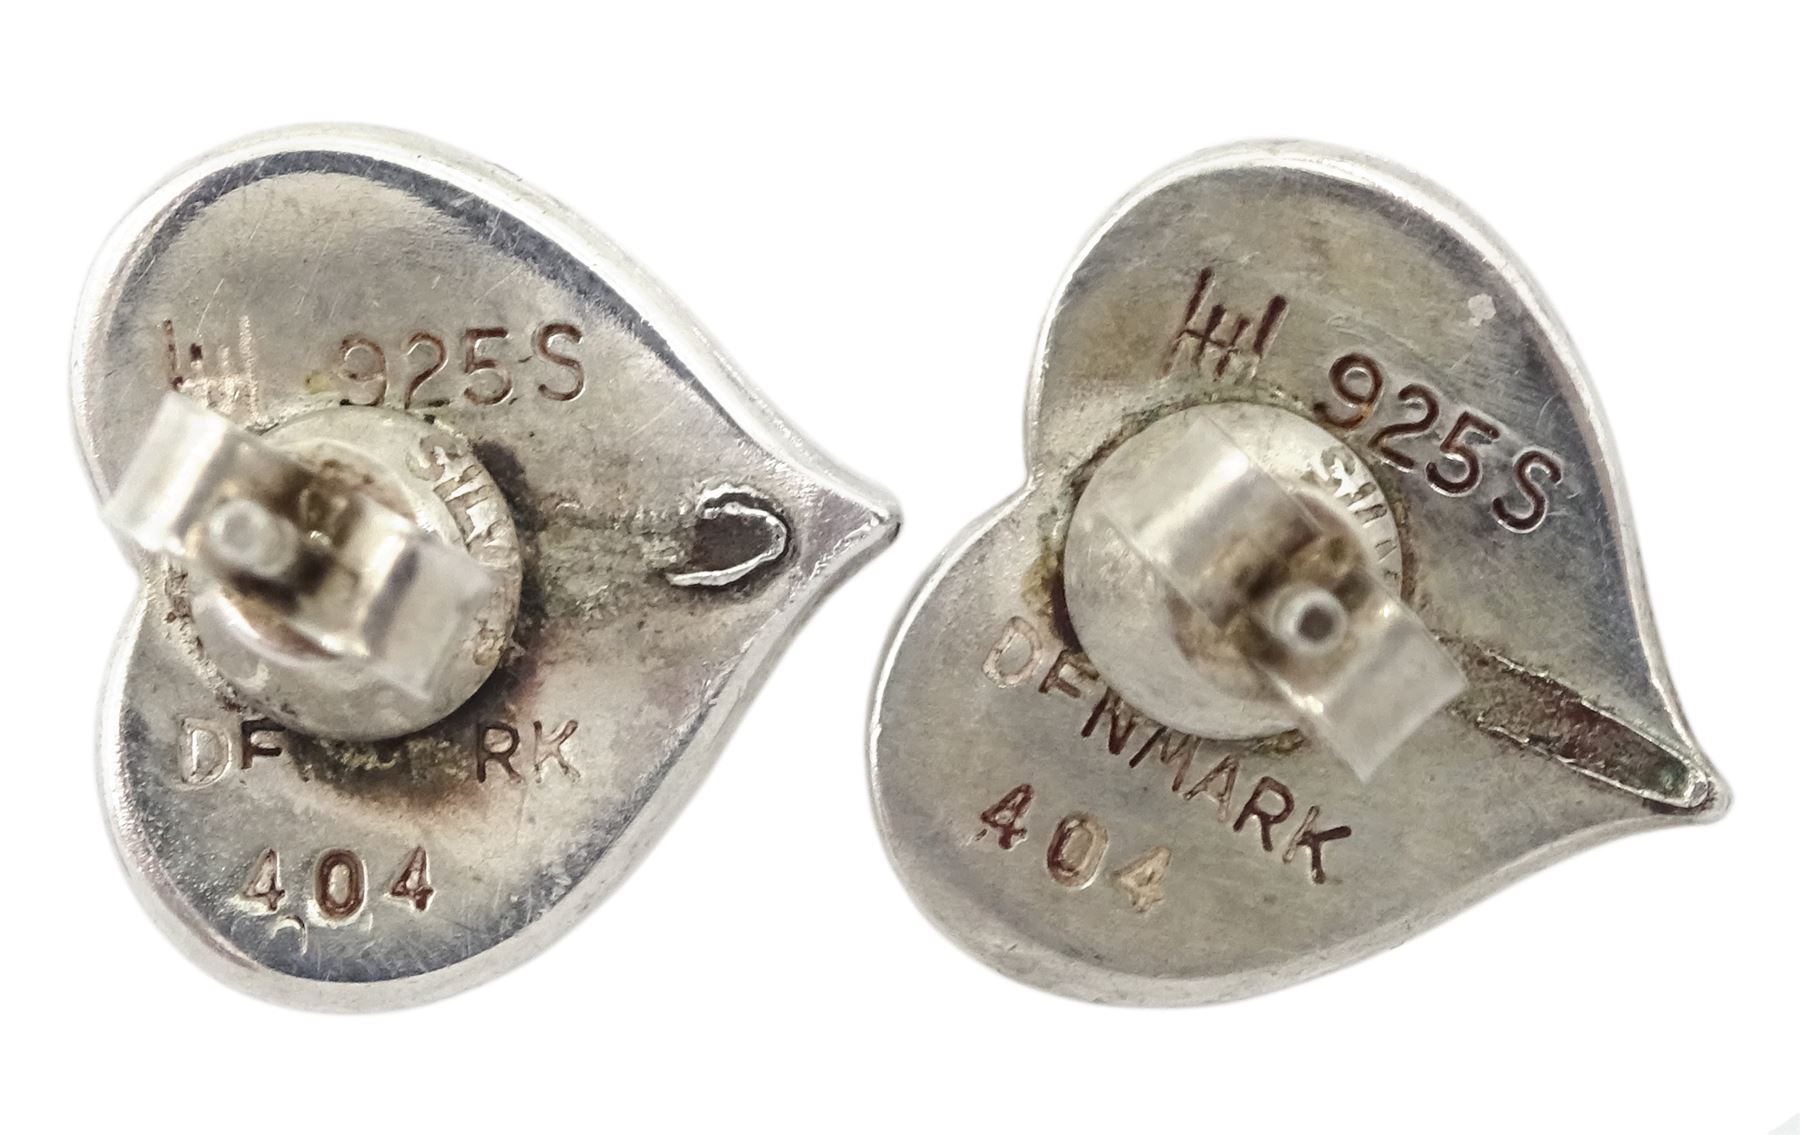 Pair of silver heart shaped stud earrings by Hans Hansen - Image 2 of 2